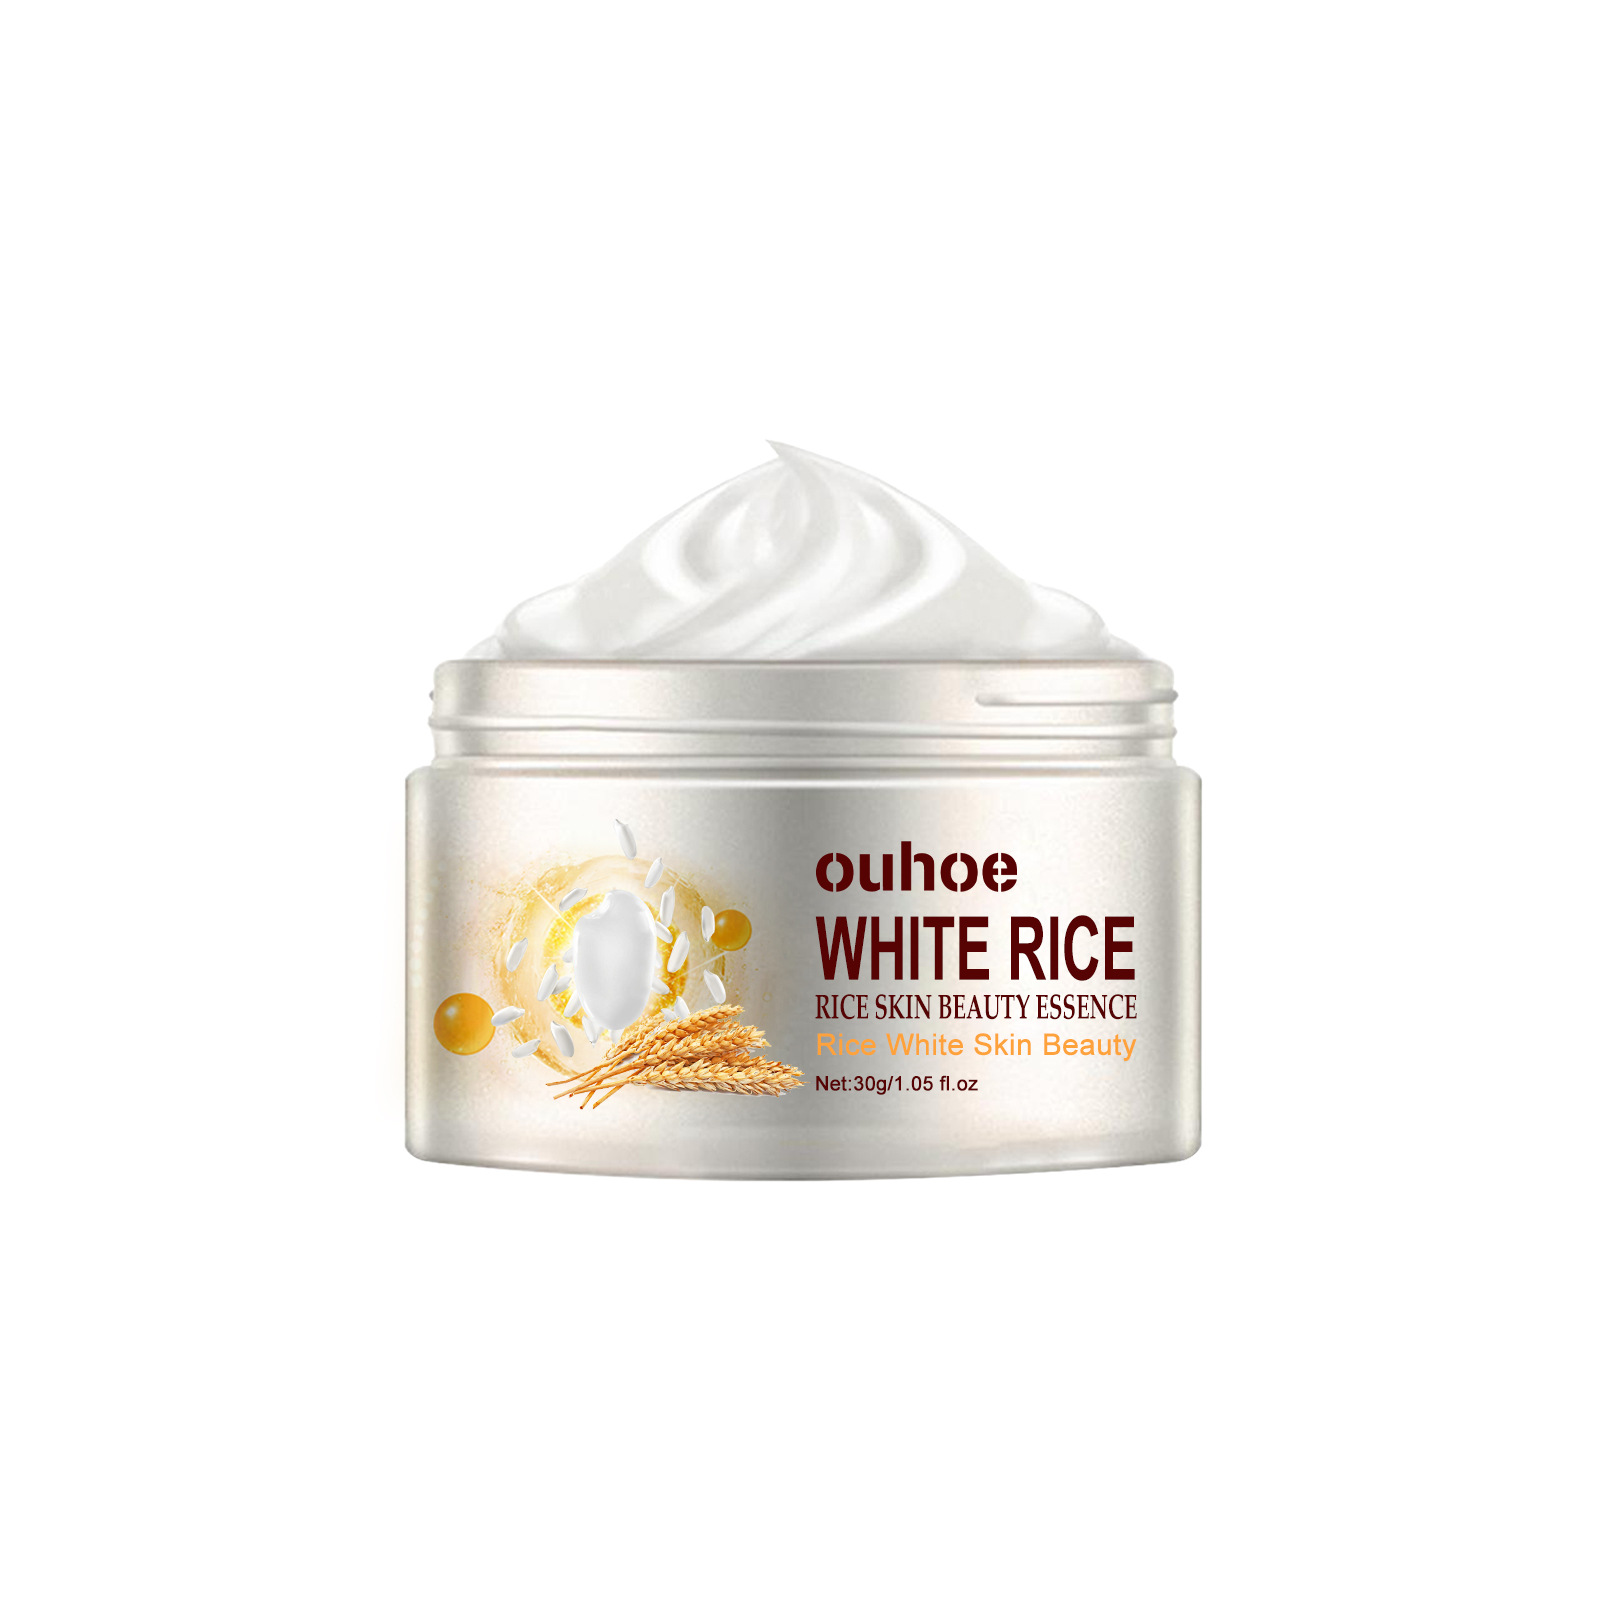 Ouhoe White Rice Skin Rejuvenation Moisturizing Cream Fading Wrinkle Firming Pore Acne Removing Hydrating Anti-Aging Whitening Cream